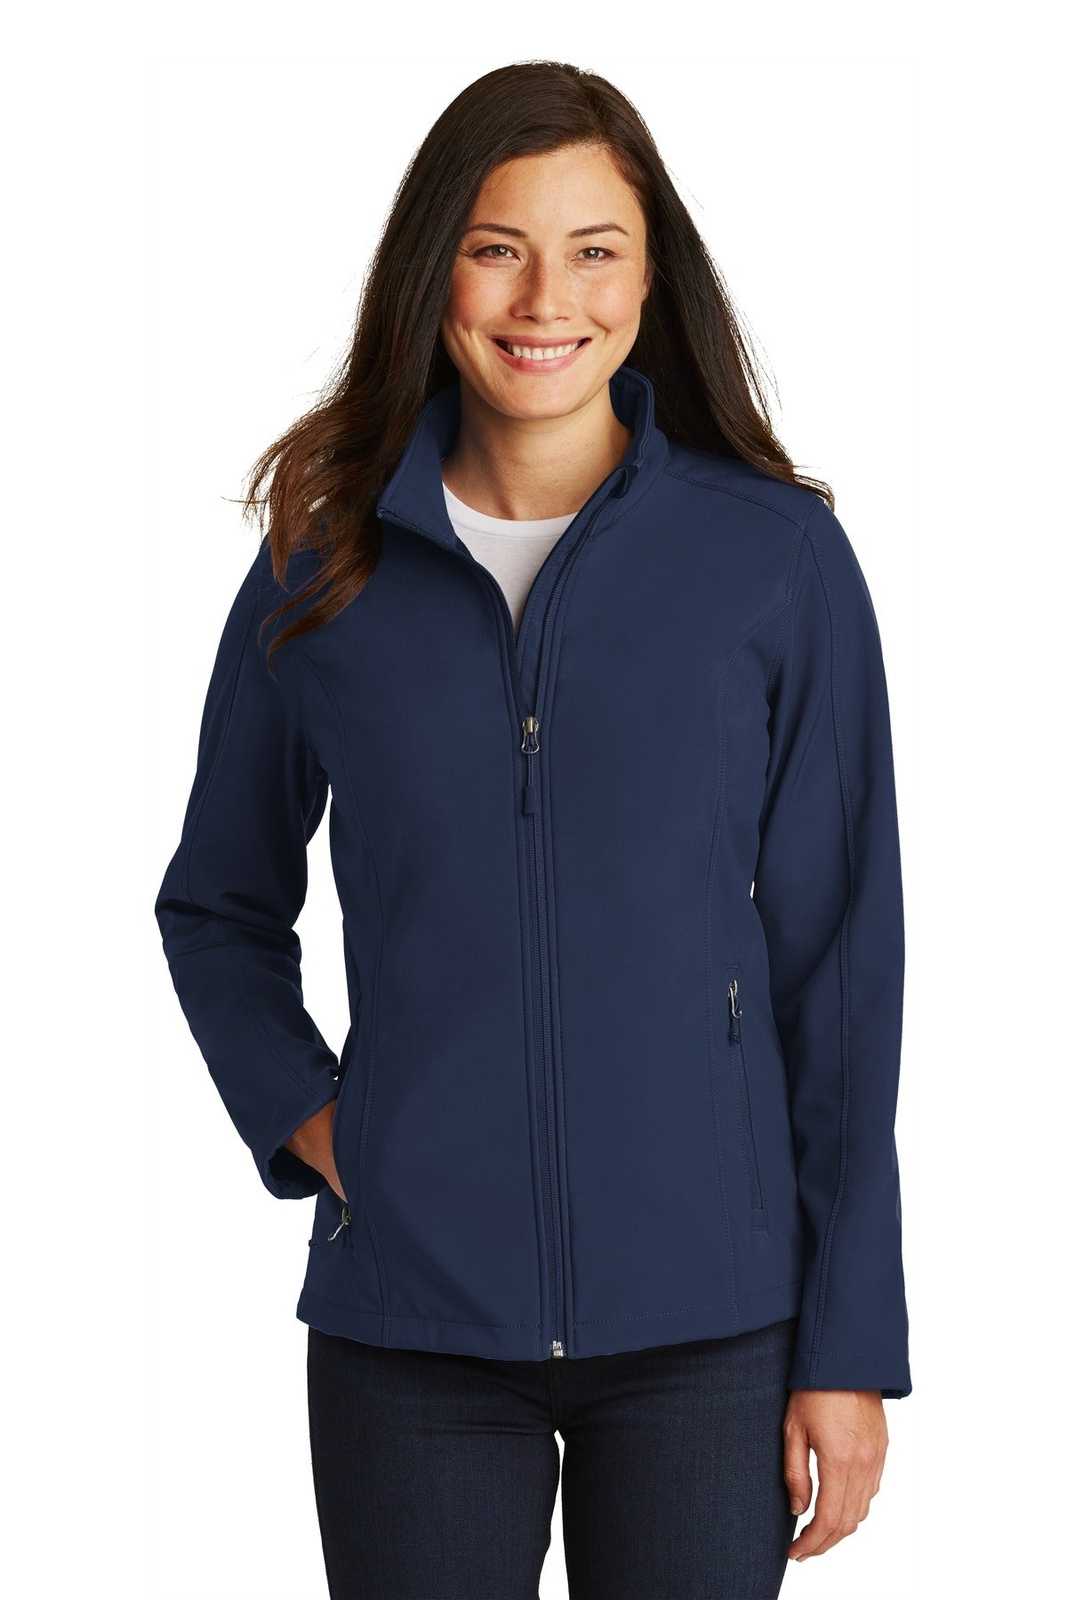 Port Authority L317 Ladies Core Soft Shell Jacket - Dress Blue Navy - HIT a Double - 1